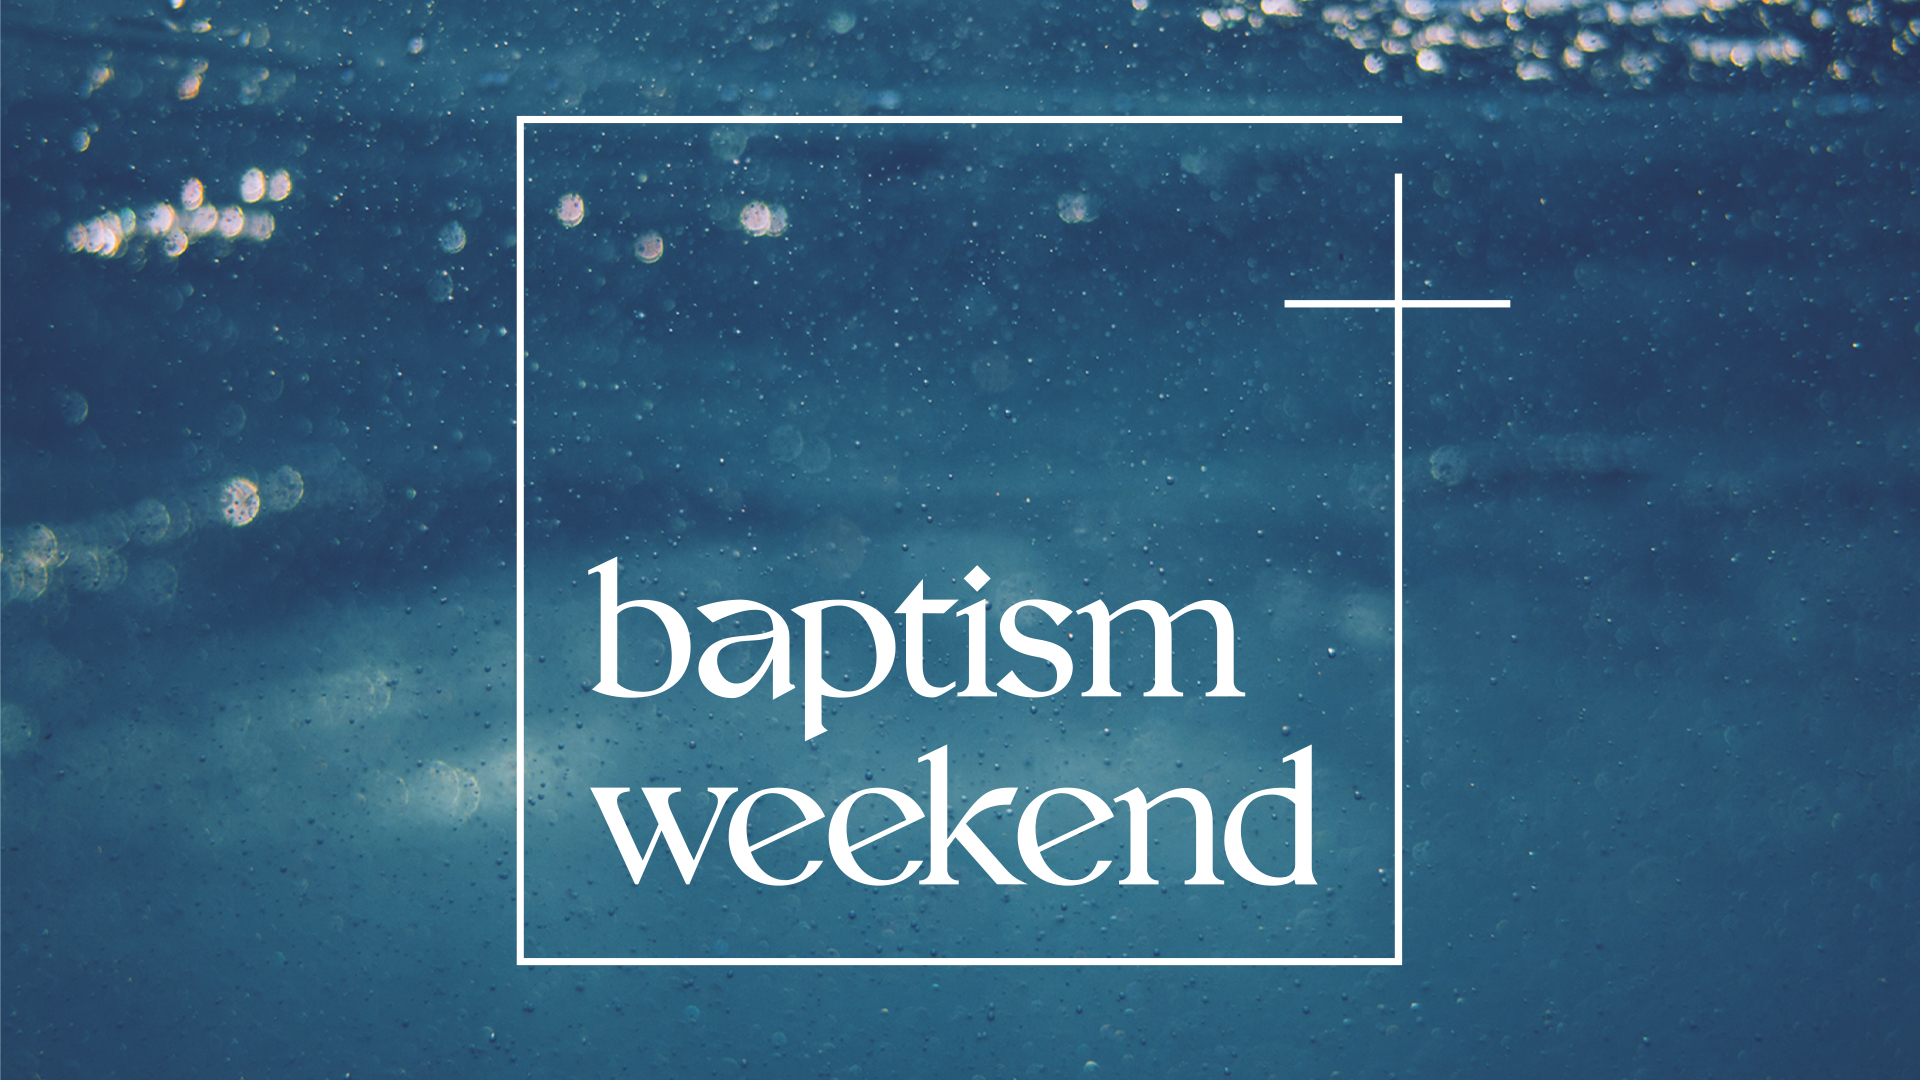 Baptism Weekend

April 20 & 21
